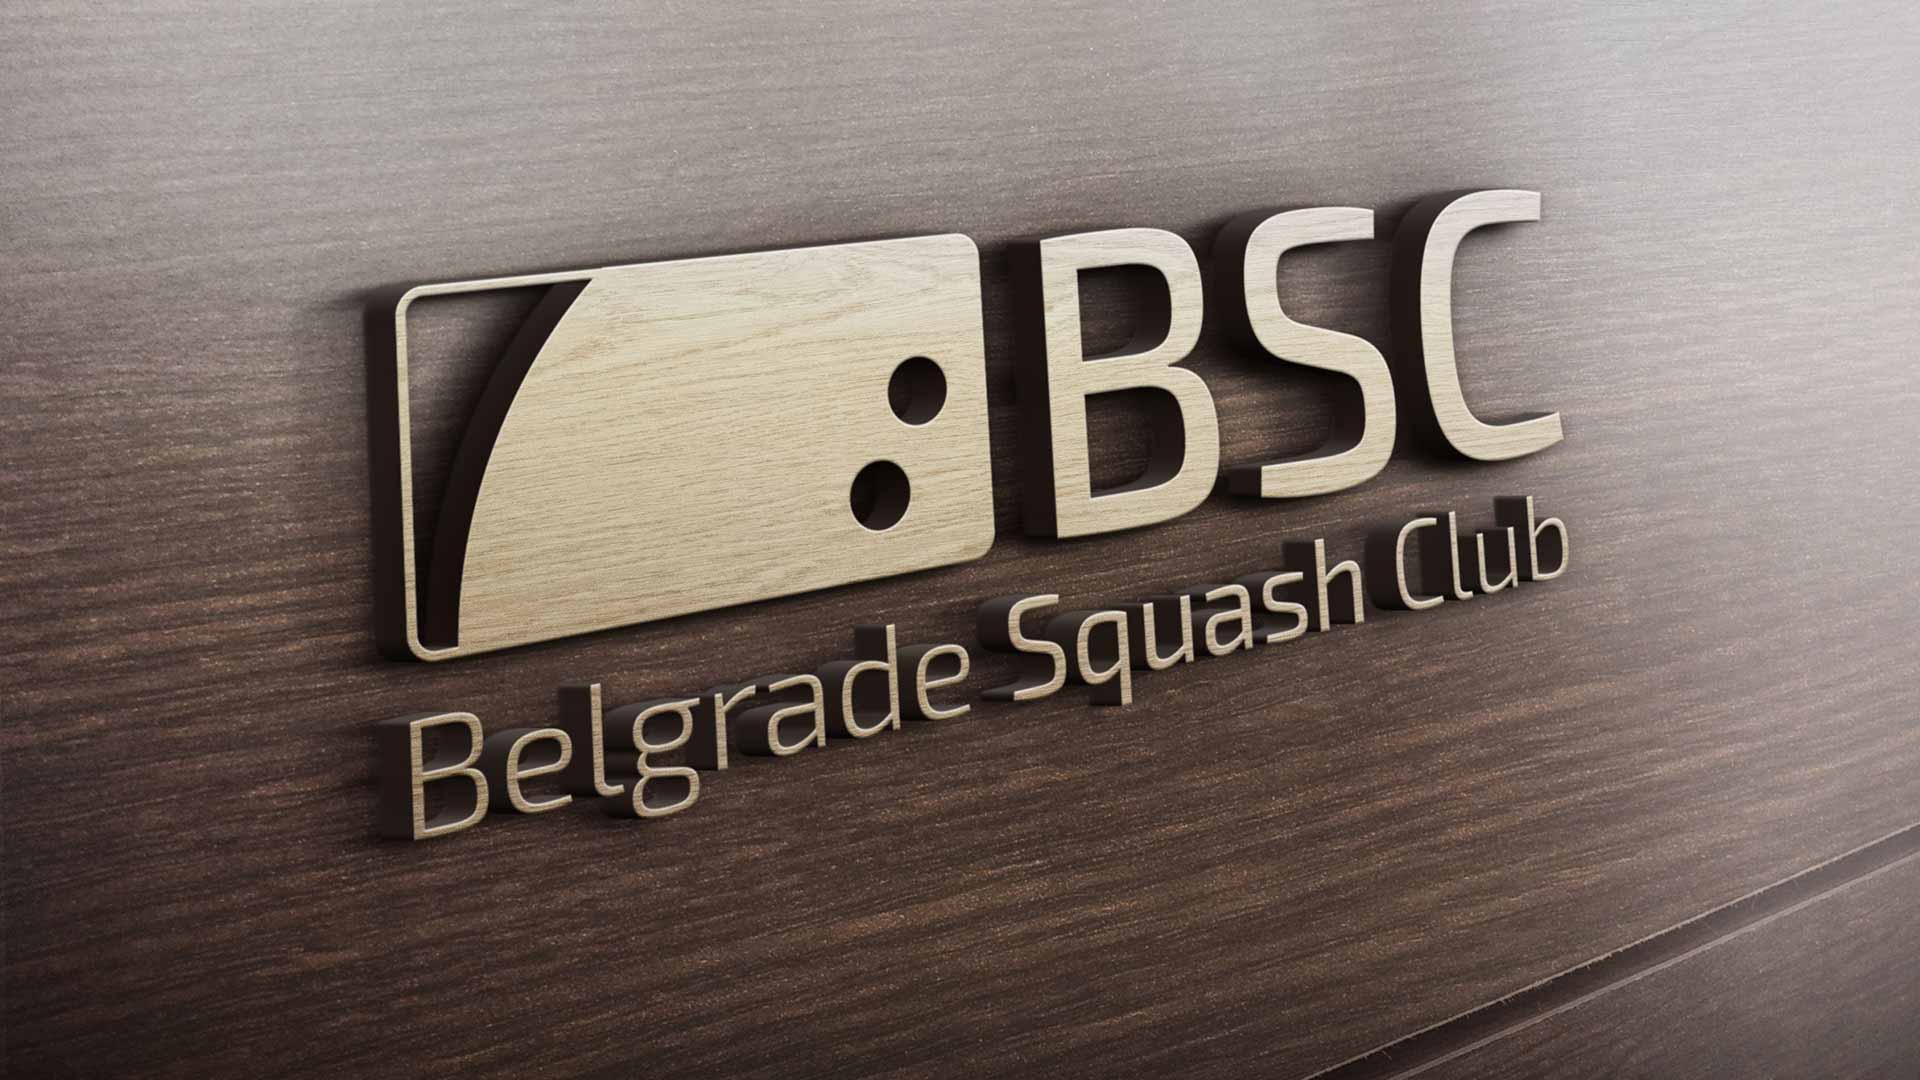 Belgrade Squash Club